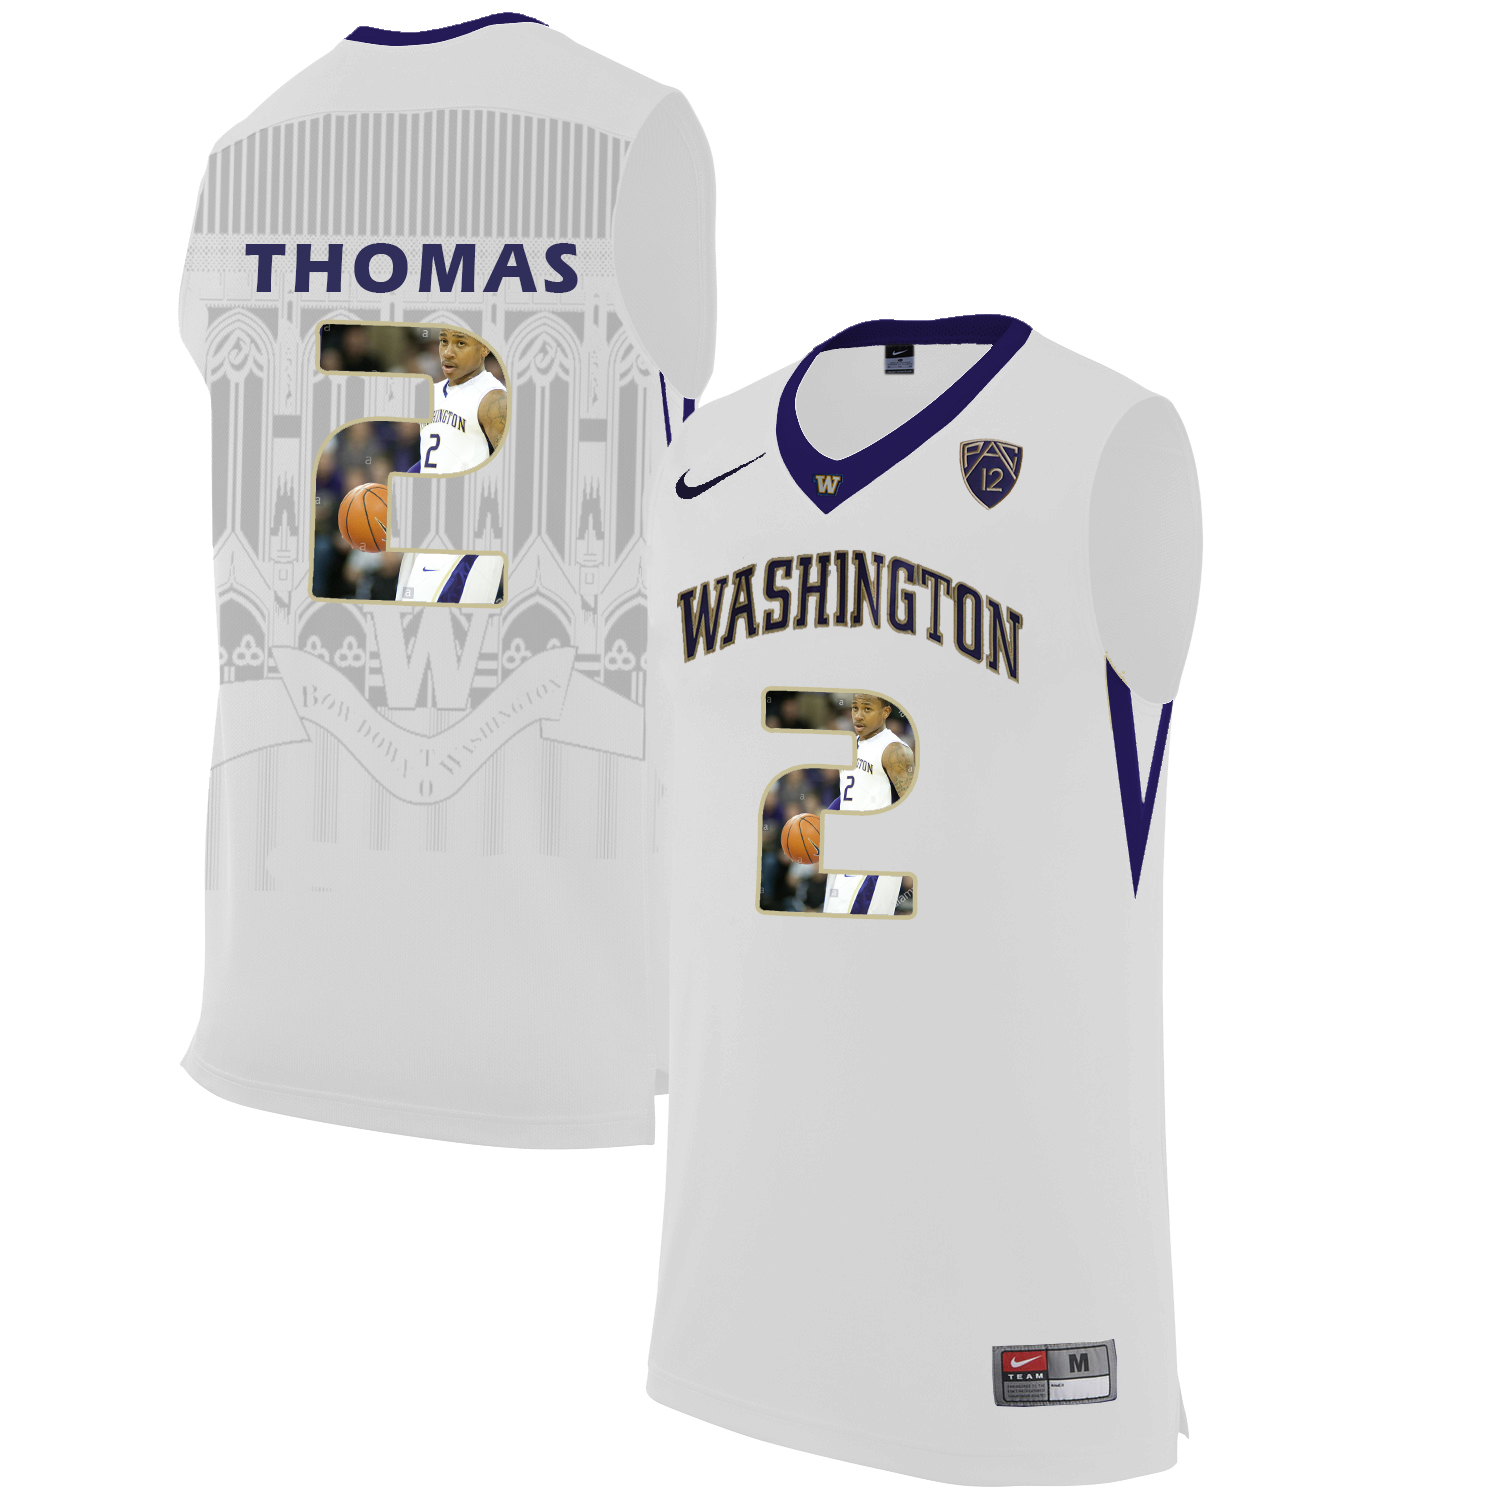 Washington Huskies 2 Isaiah Thomas White With Portait College Basketball Jersey